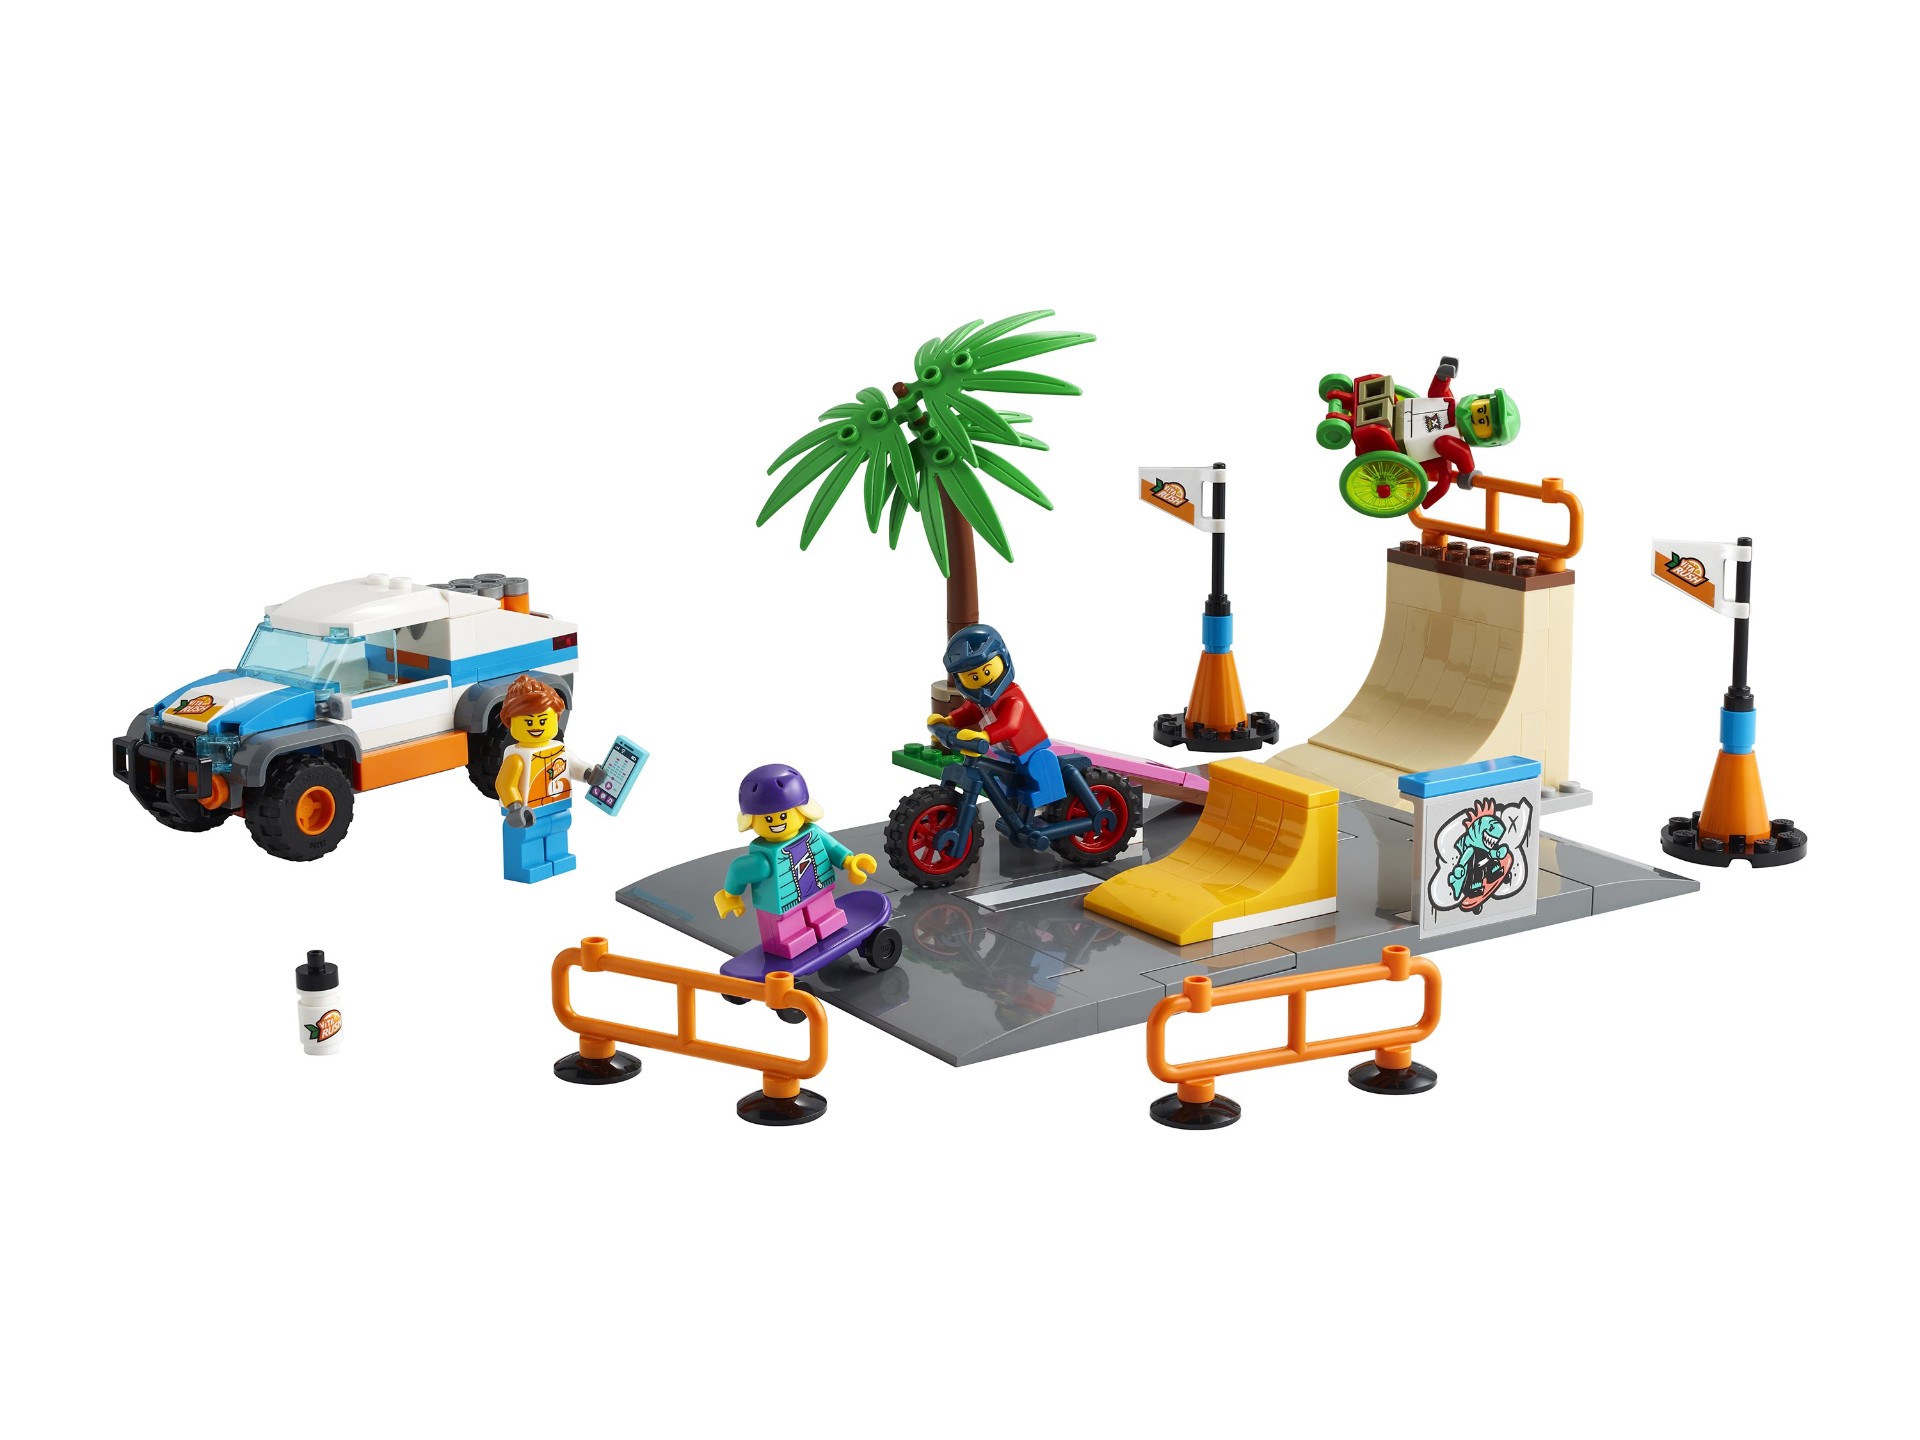 Конструктор LEGO City Community «Скейт-парк» 60290 / 195 деталей